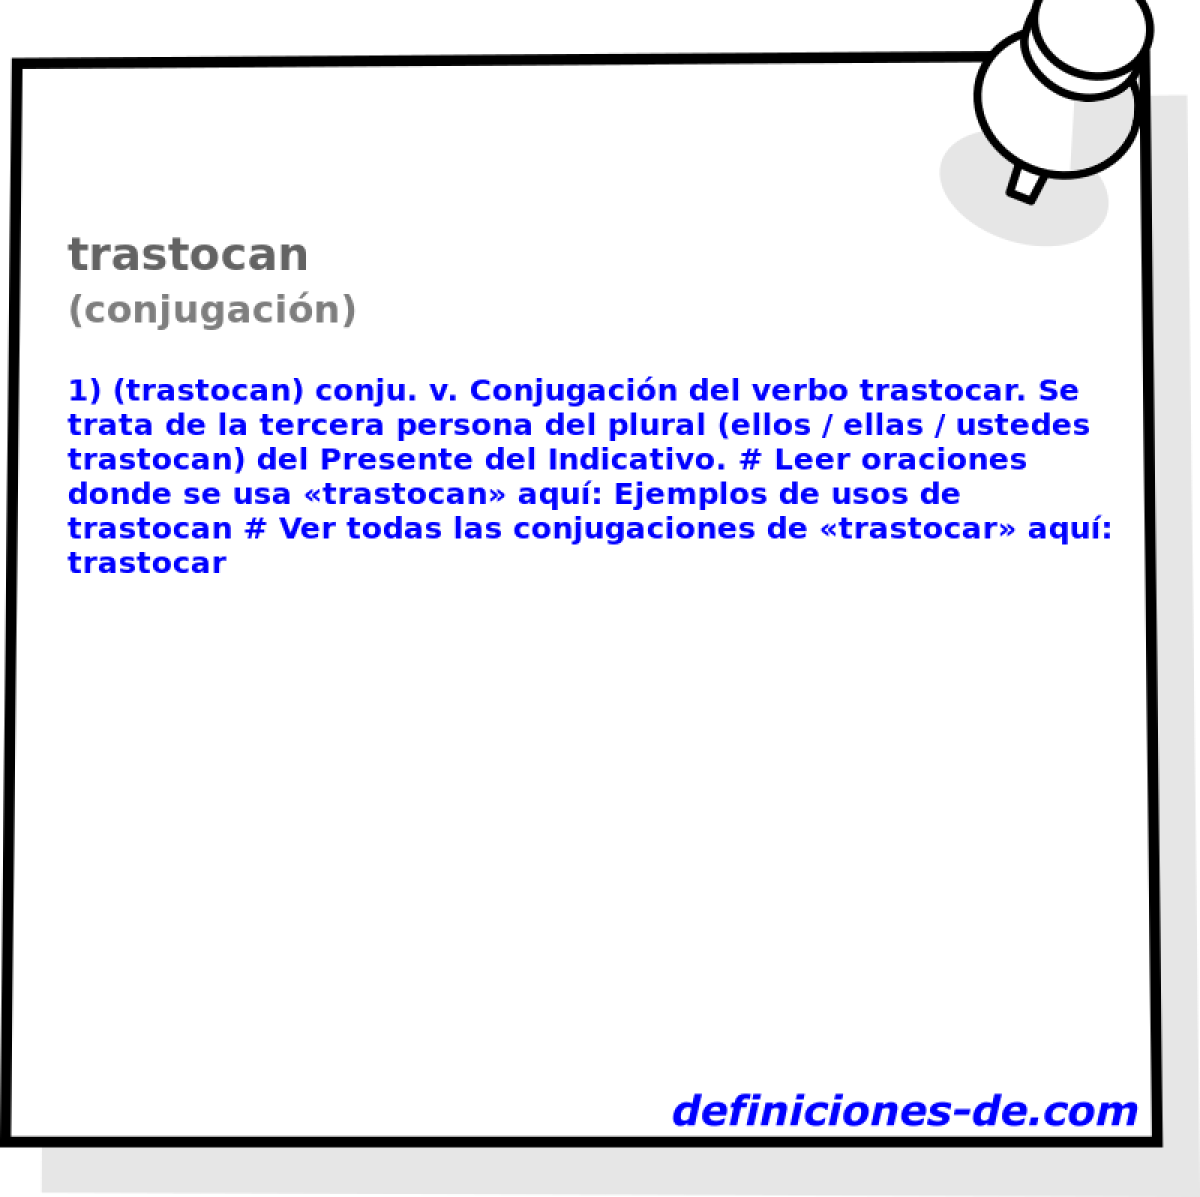 trastocan (conjugacin)